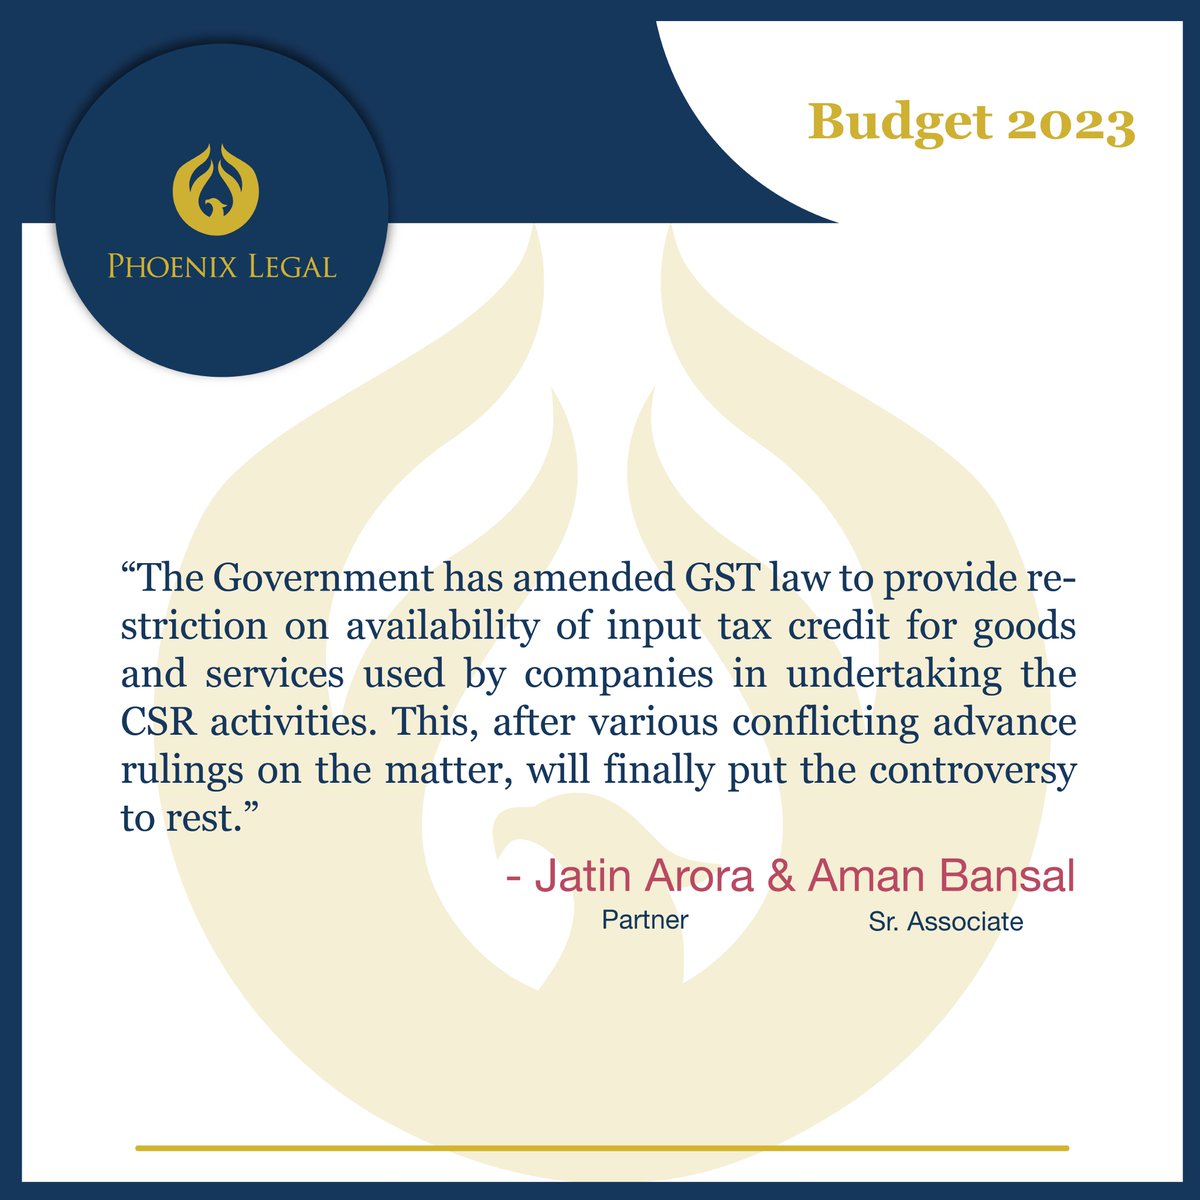 #budget2023views 
Our Partner Jatin Arora and Senior Associate Aman Bansal share their views on amended GST law for companies undertaking CSR activities. 

#PhoenixLegal #GST #indirecttax #CSR  #corporatesocialresponsibility #inputtaxcredit #itc